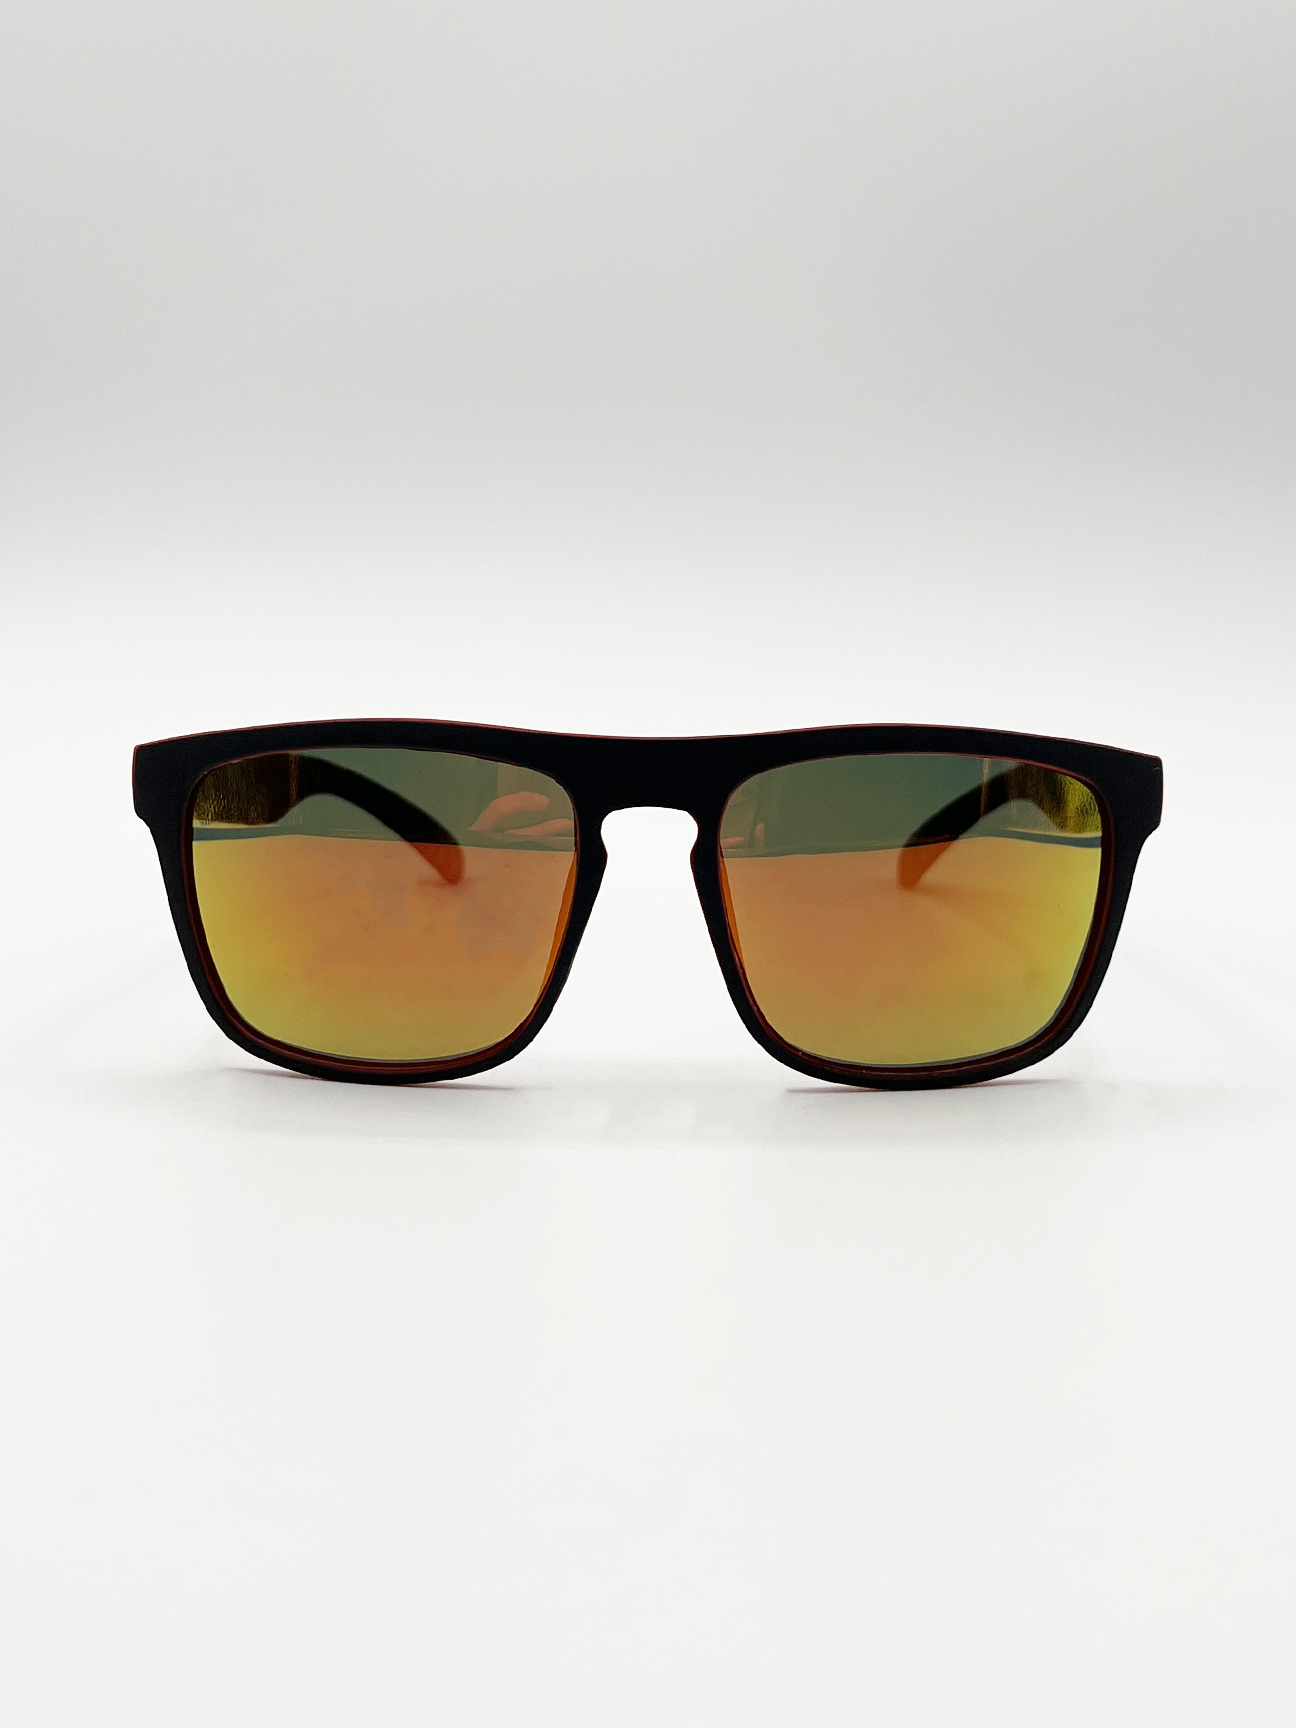 Matte Black Wayfarer Sunglasses with Orange Mirrored Lens